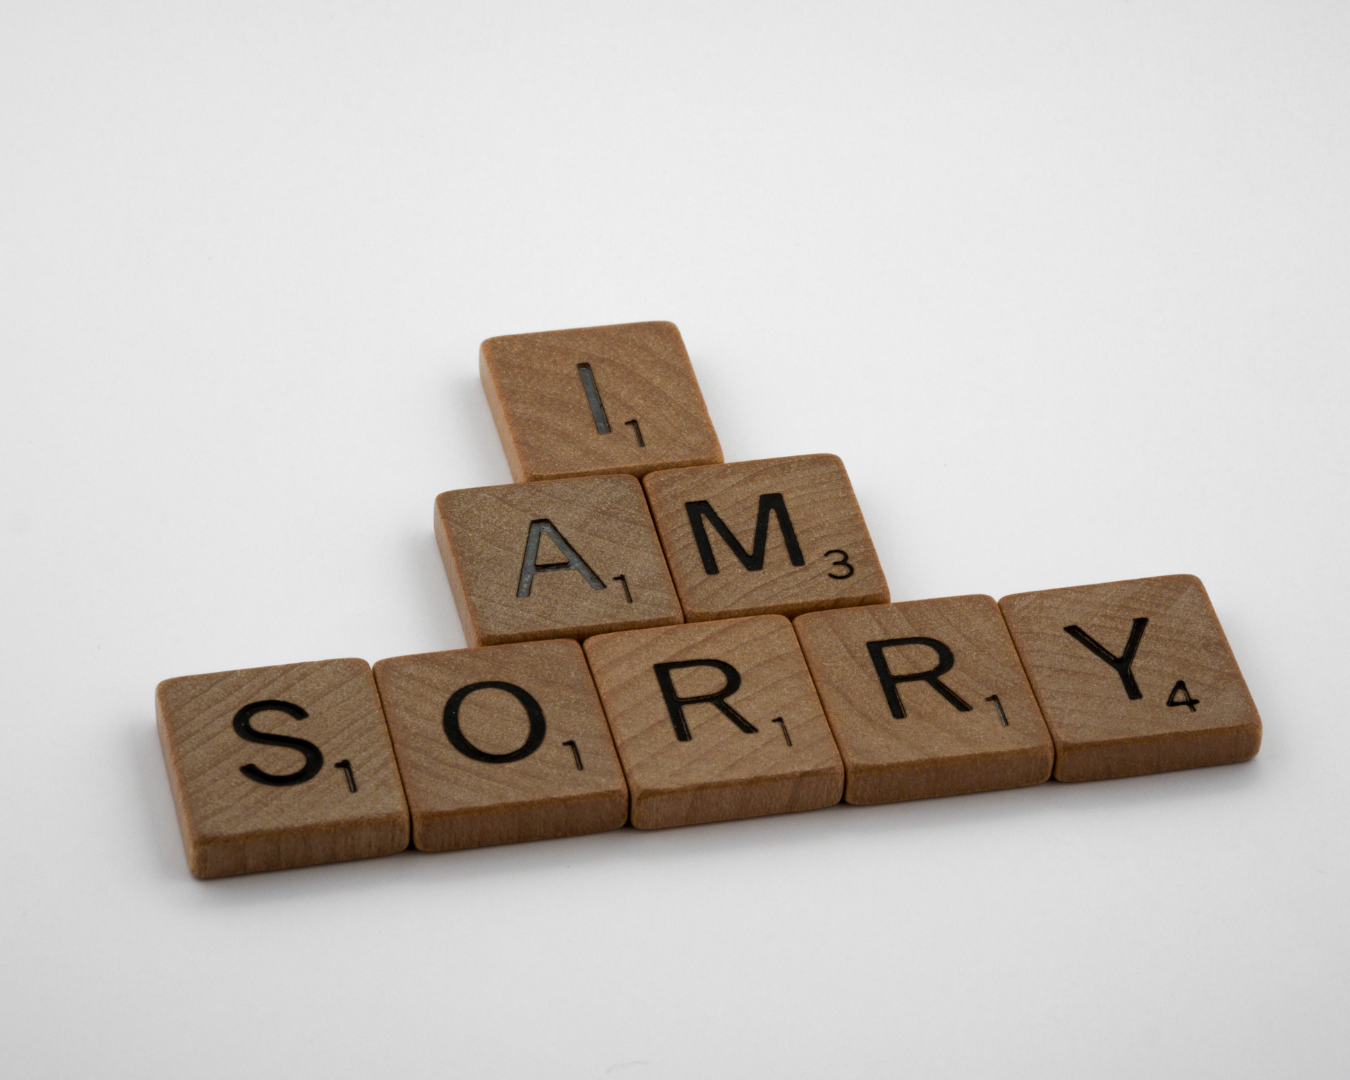 stop apologizing